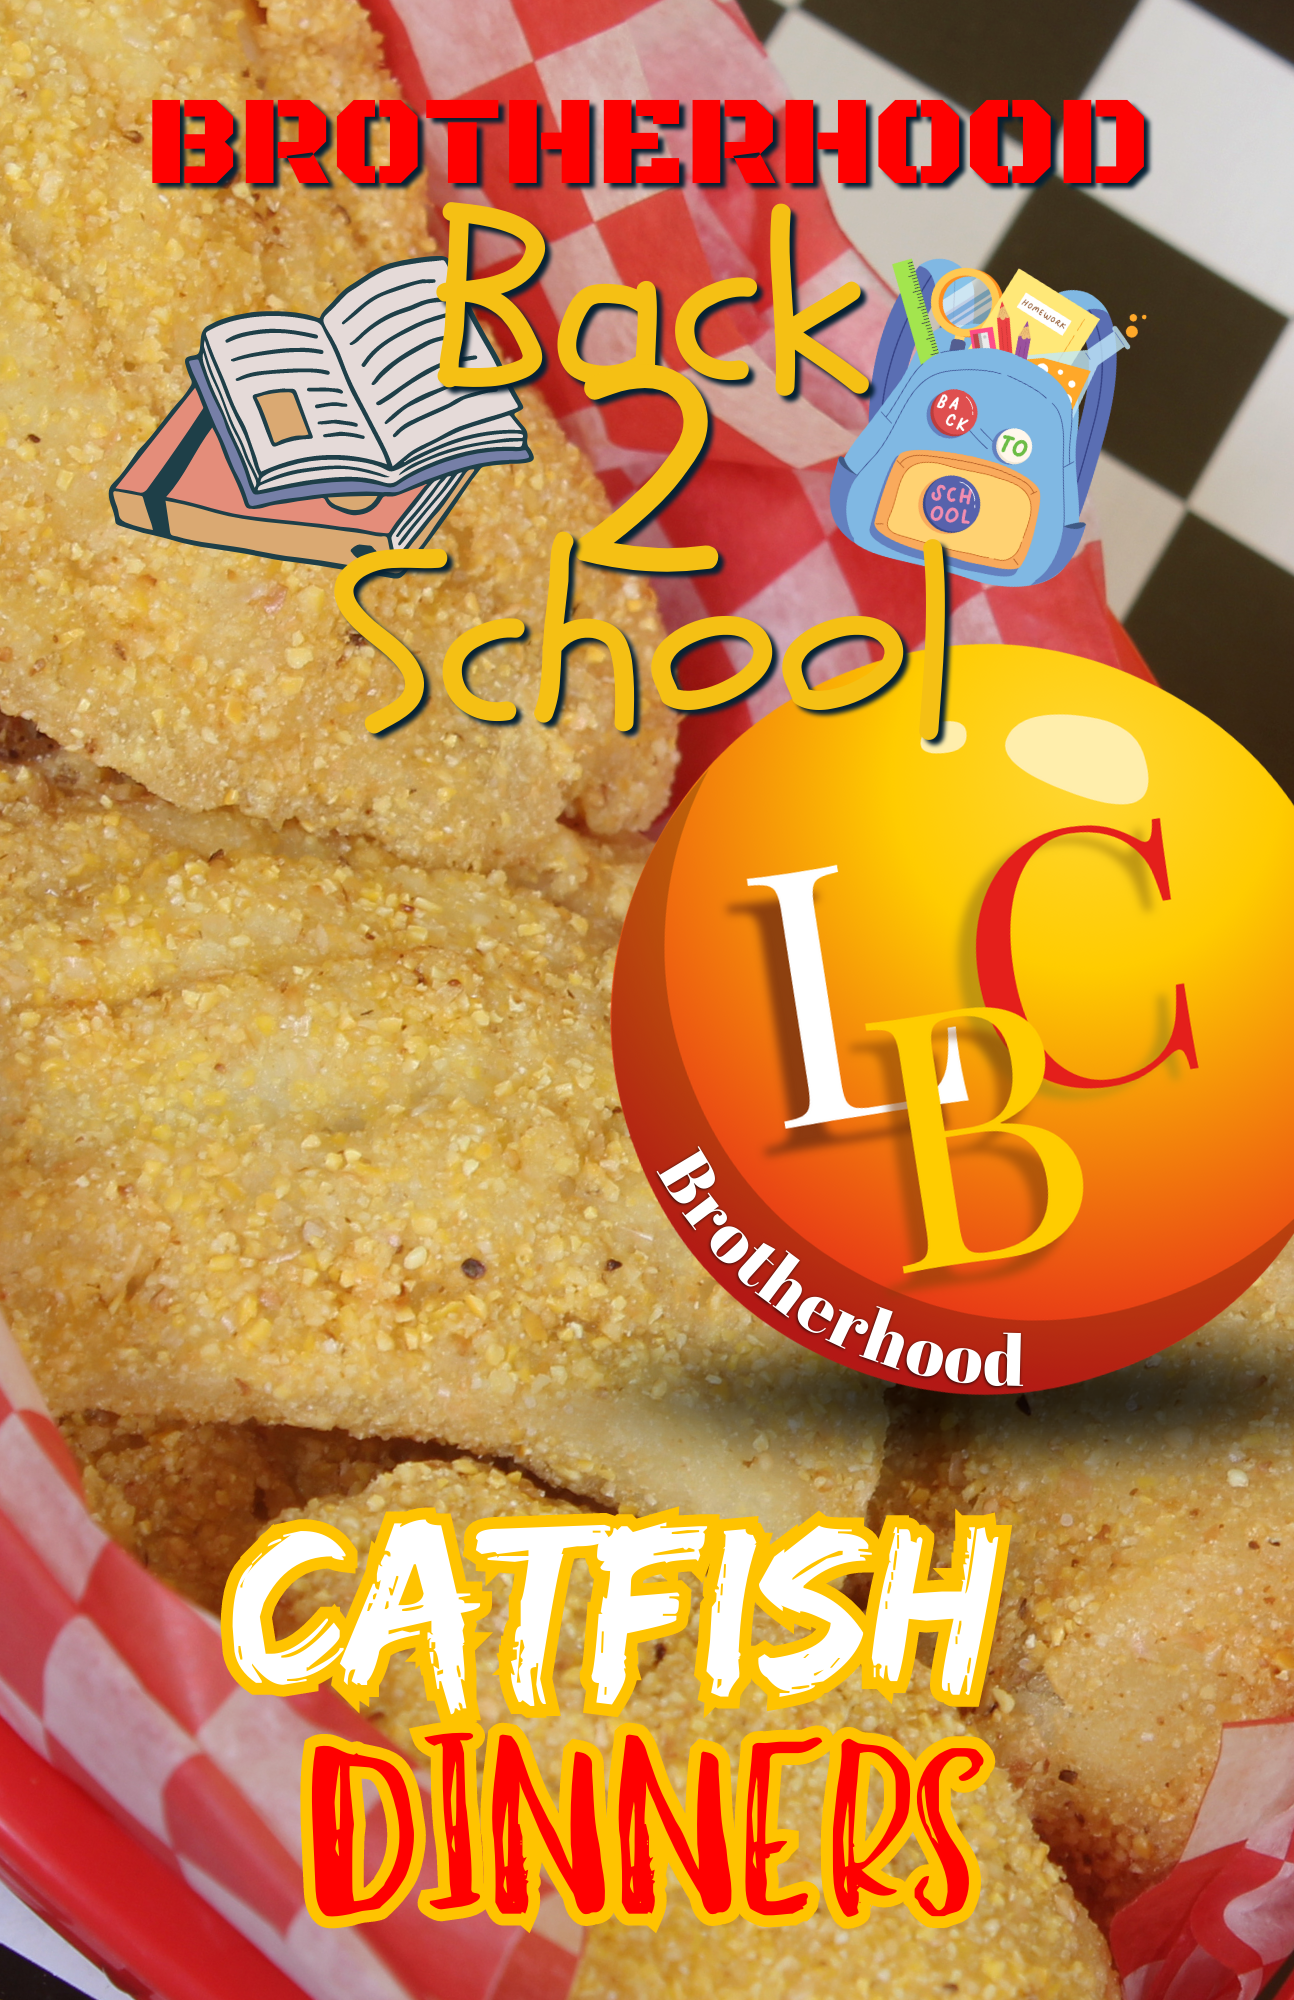 BackToSchool_CatFish_Product Image.png